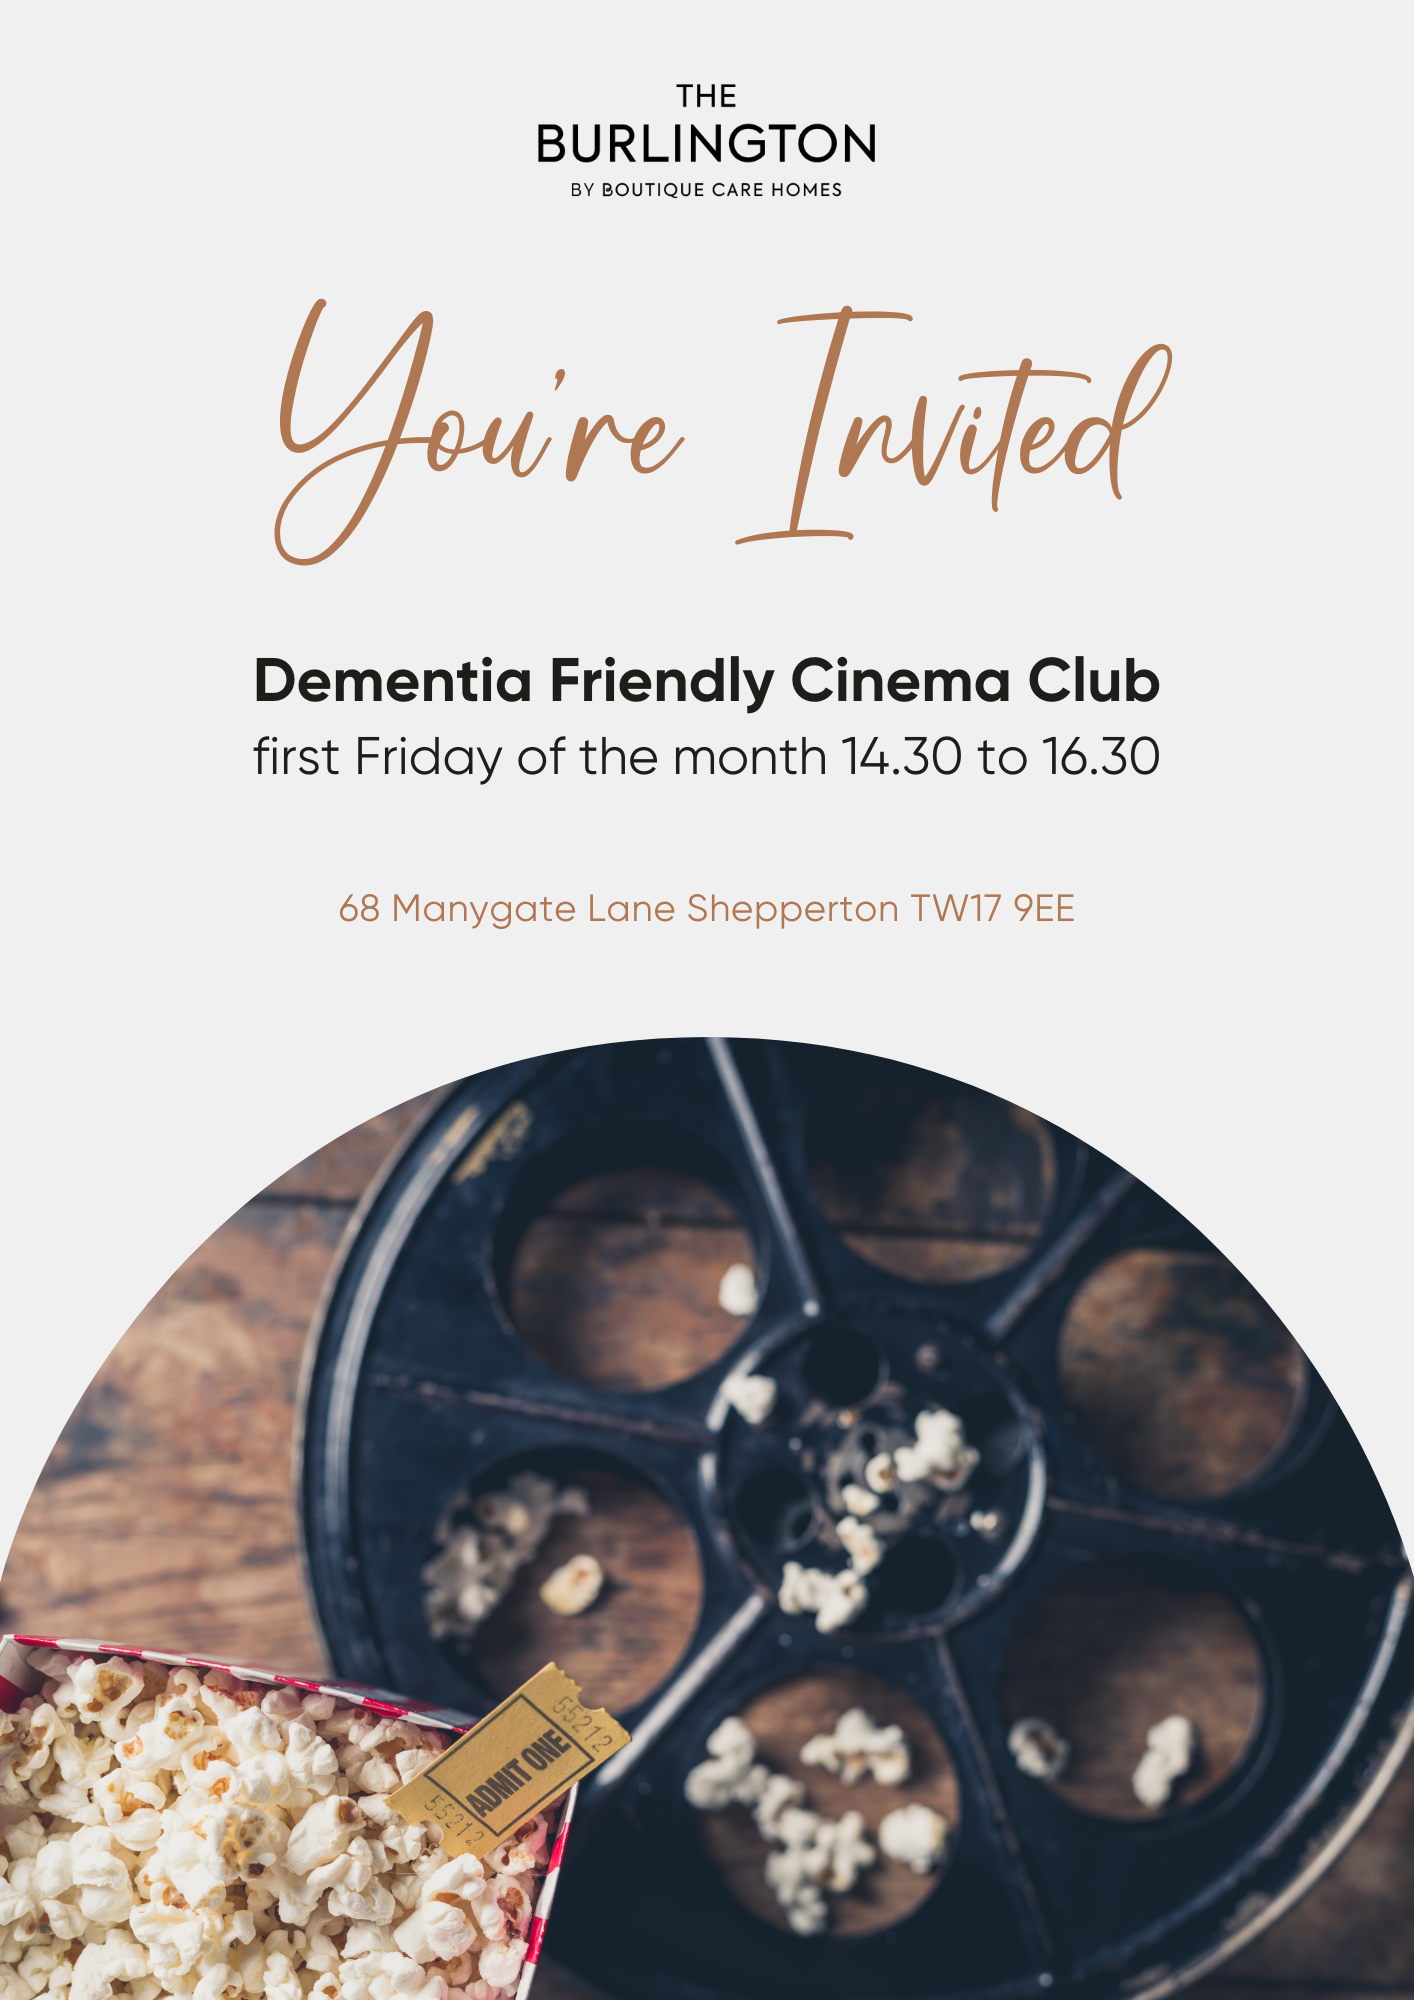 Dementia Friendly Cinema Club Launches at The Burlington.